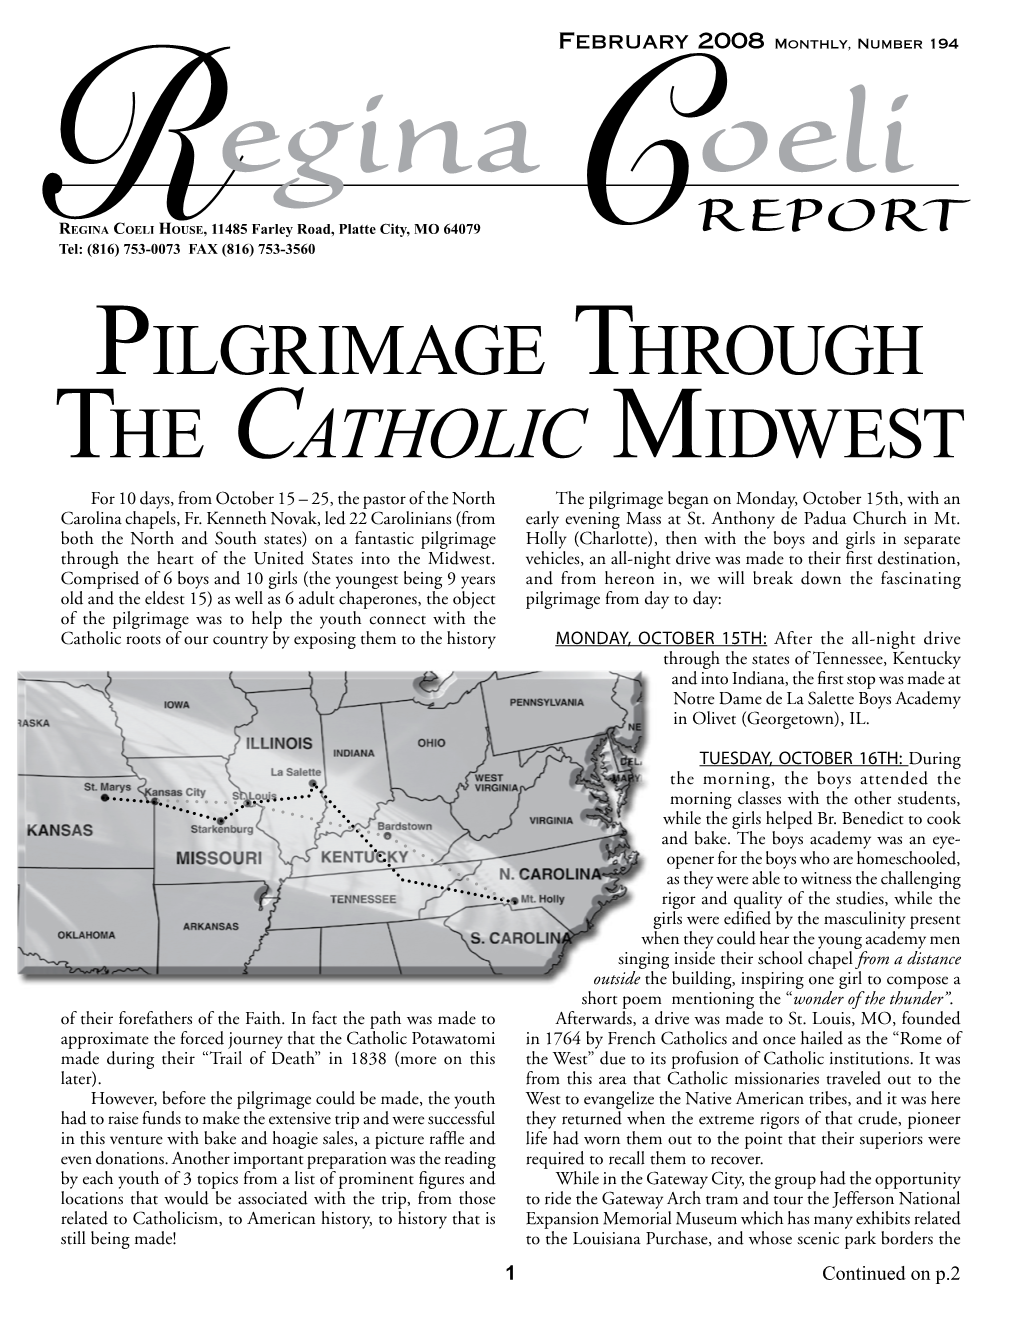 Pilgrimage Through the Catholic Midwest